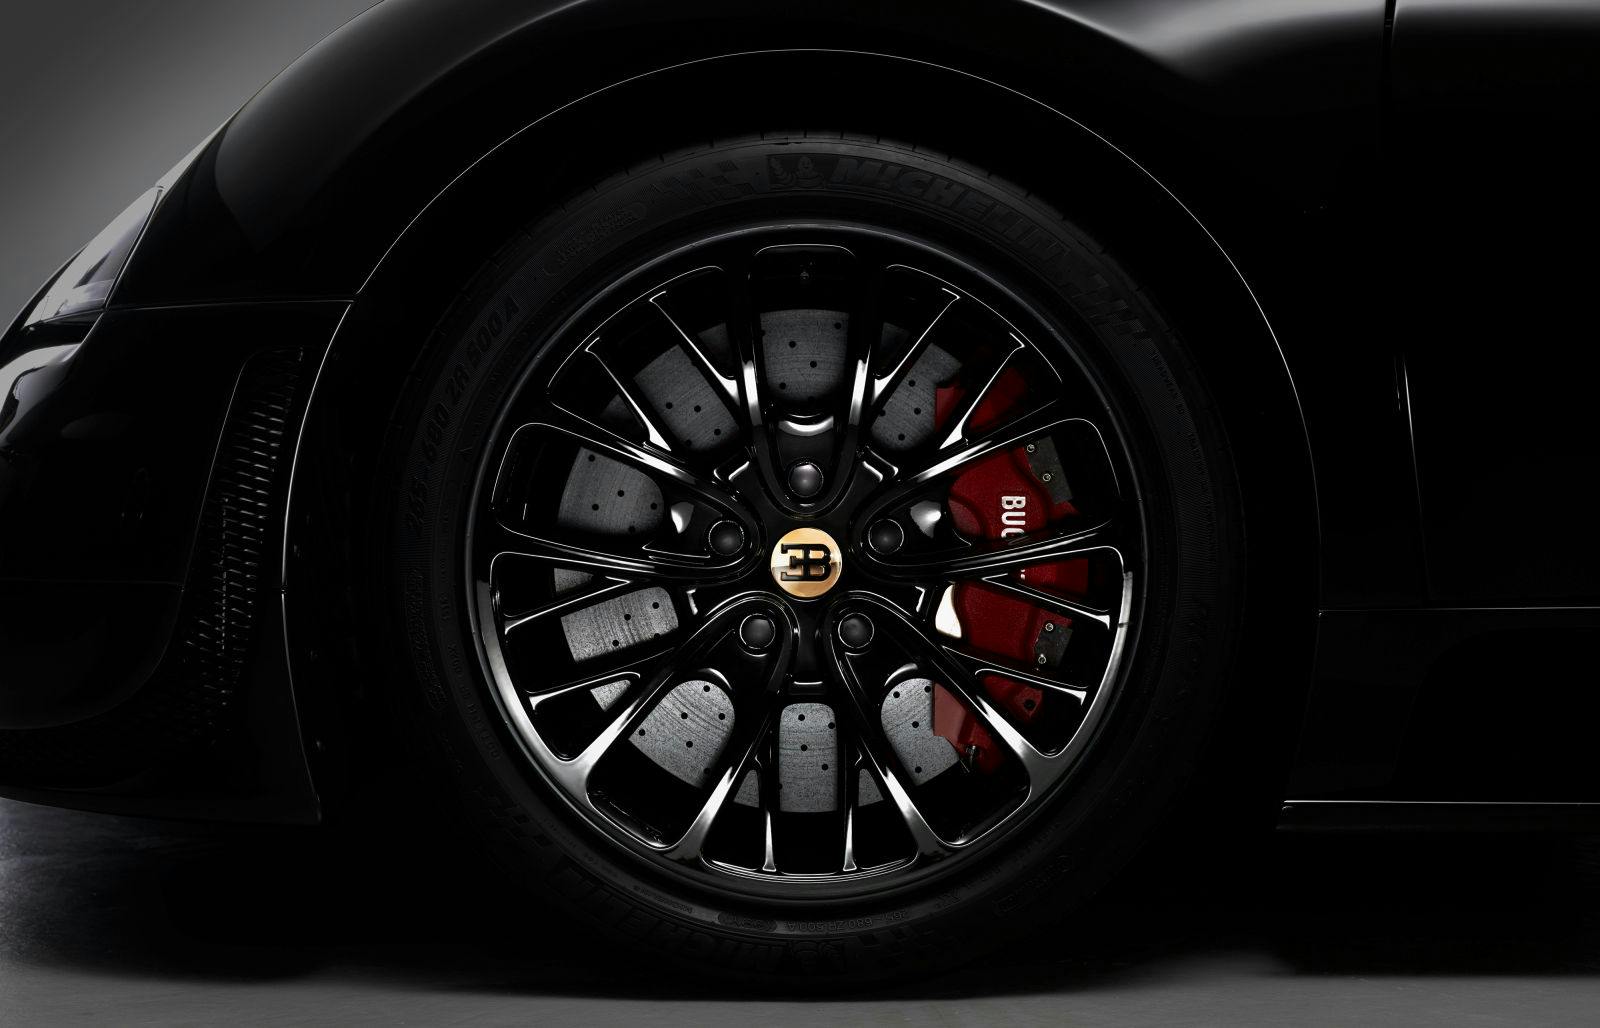 Bugatti Legend Black Bess": Black rims and hub covers sporting a brilliant 24-carat gold finish and the EB logo"